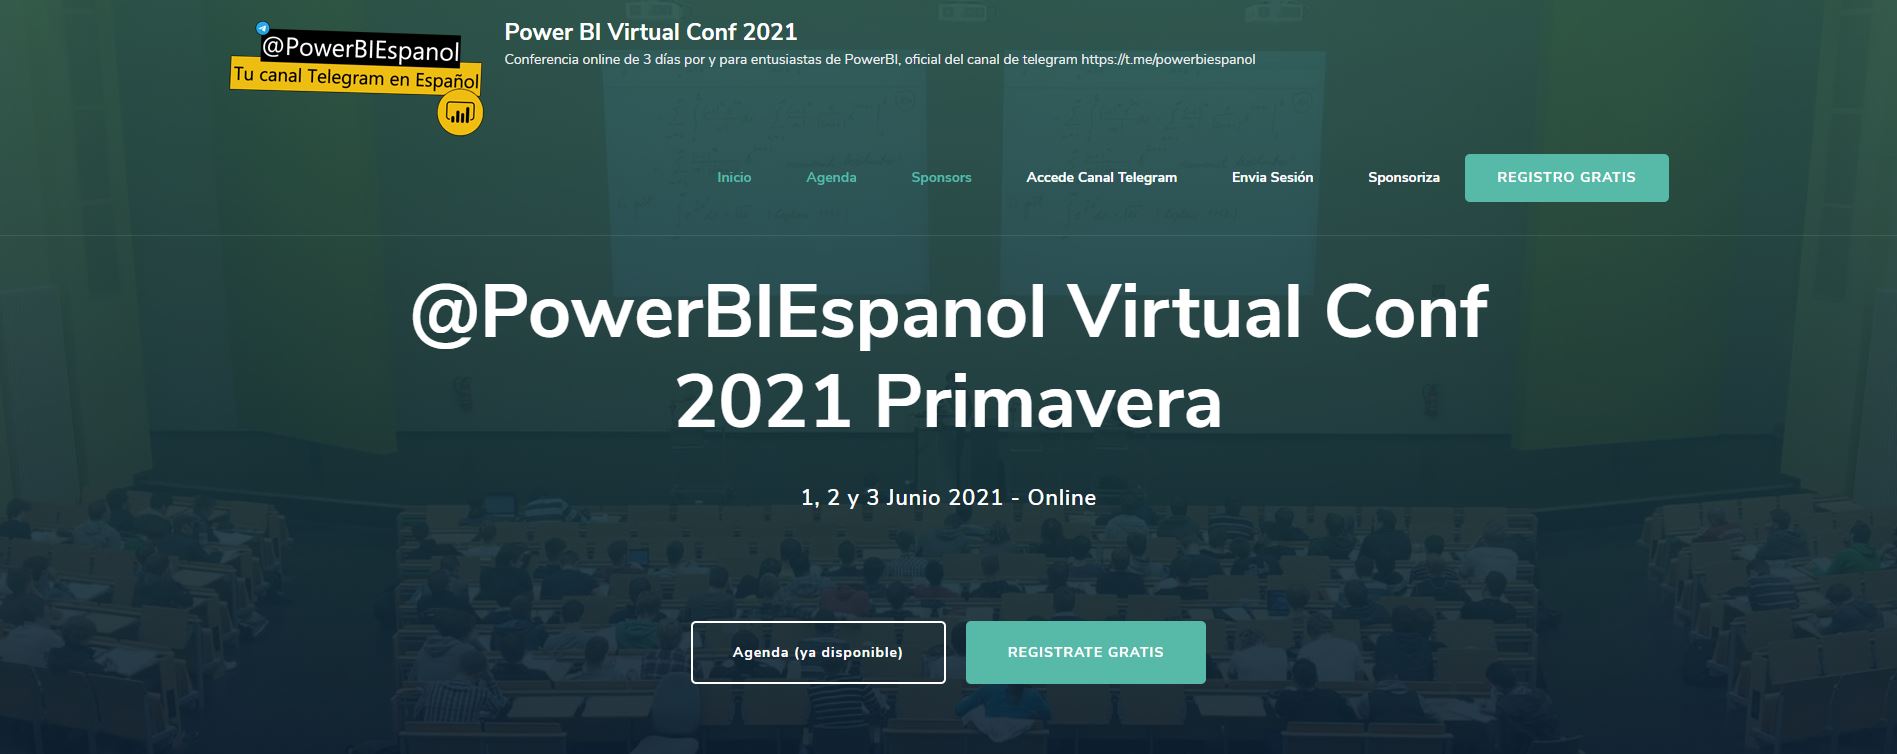 PowerBIEspanol Virtual Conf 2021